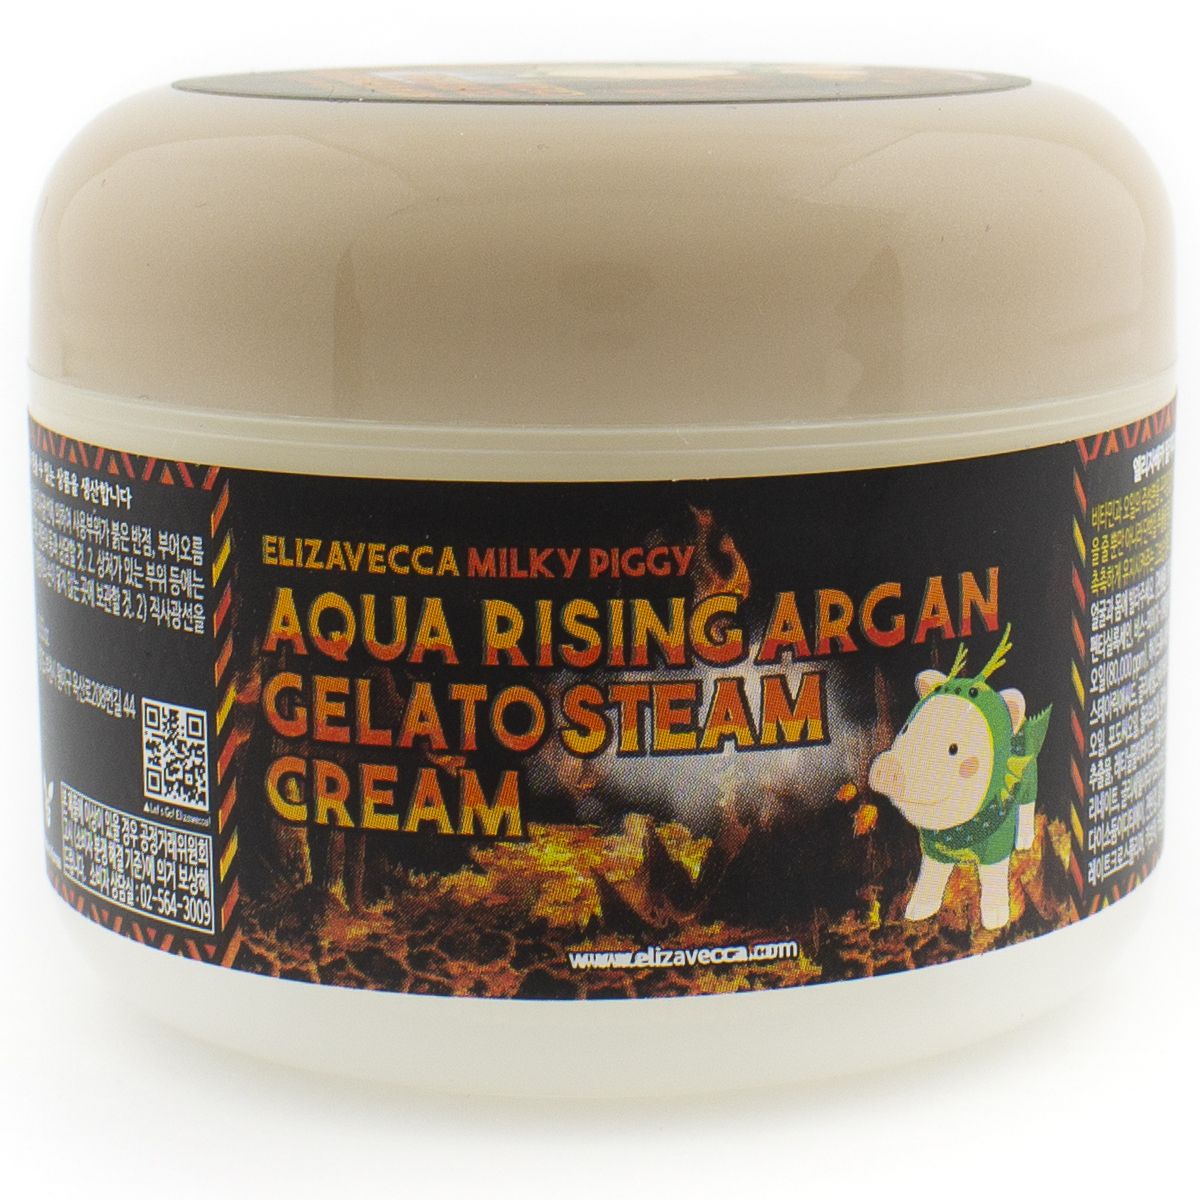 Aqua rising argan gelato steam фото 53